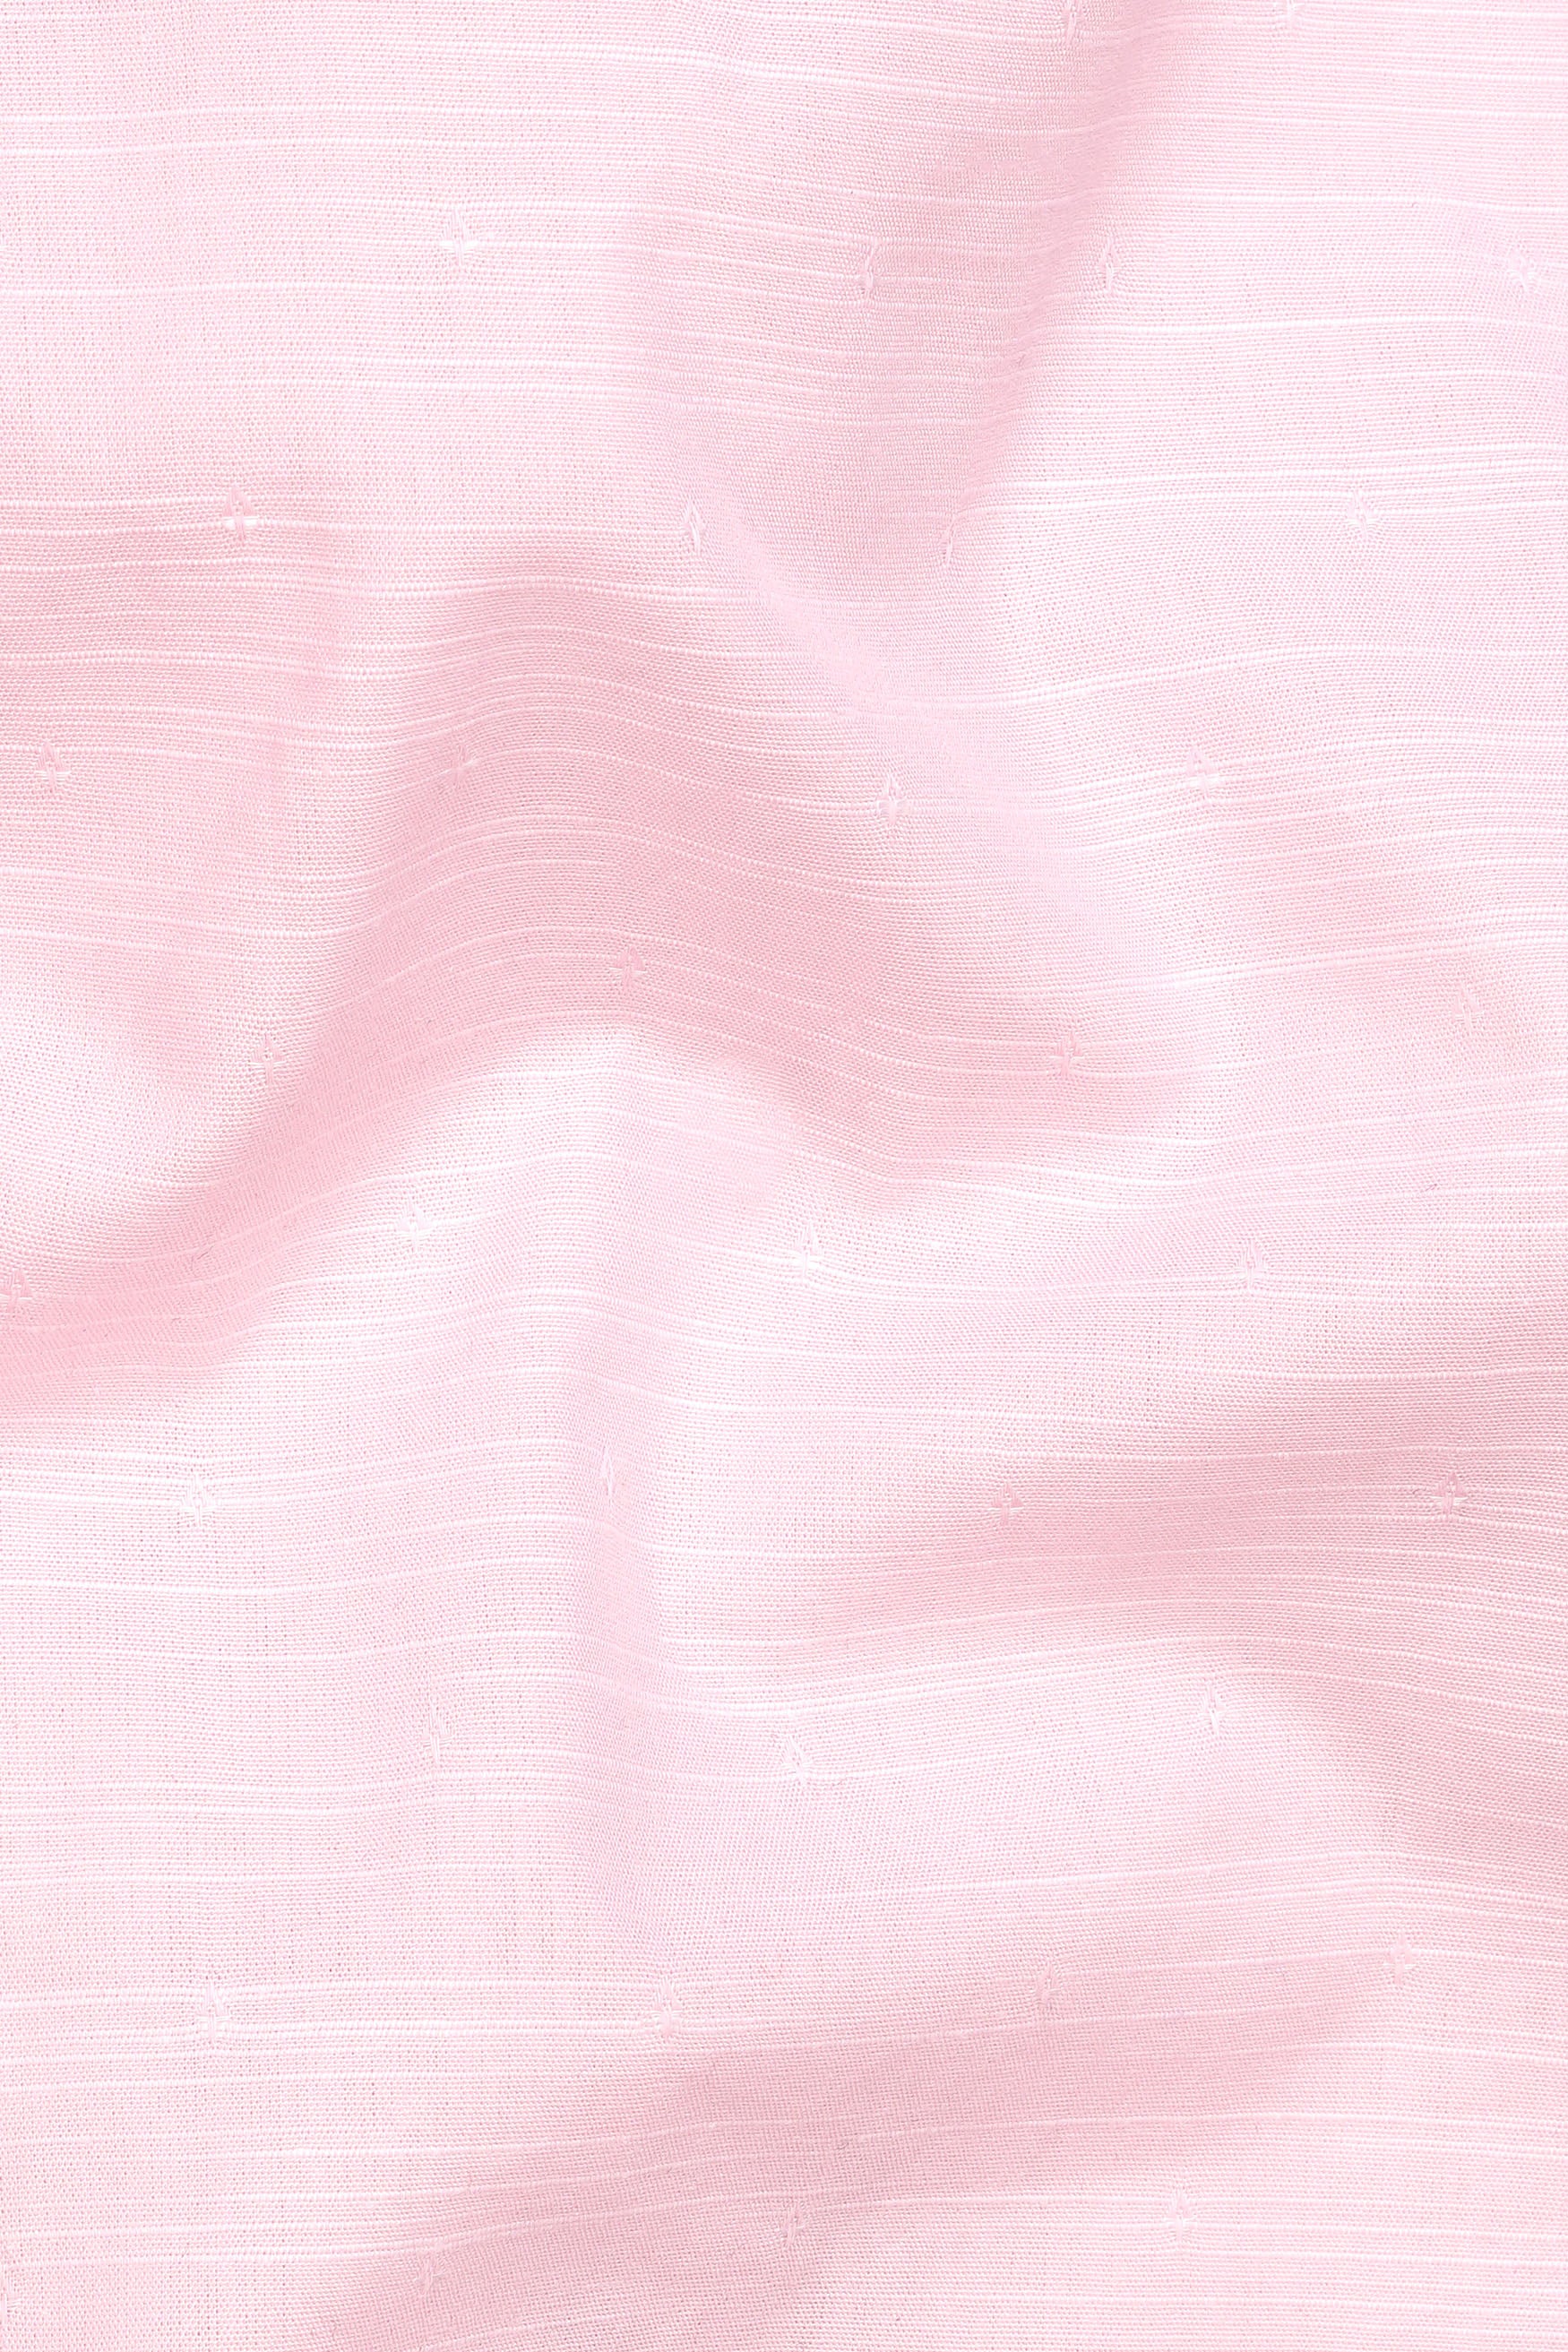 Cosmos Pink Dobby Textured Giza Cotton Shorts SR352-28,  SR352-30,  SR352-32,  SR352-34,  SR352-36,  SR352-38,  SR352-40,  SR352-42,  SR352-44